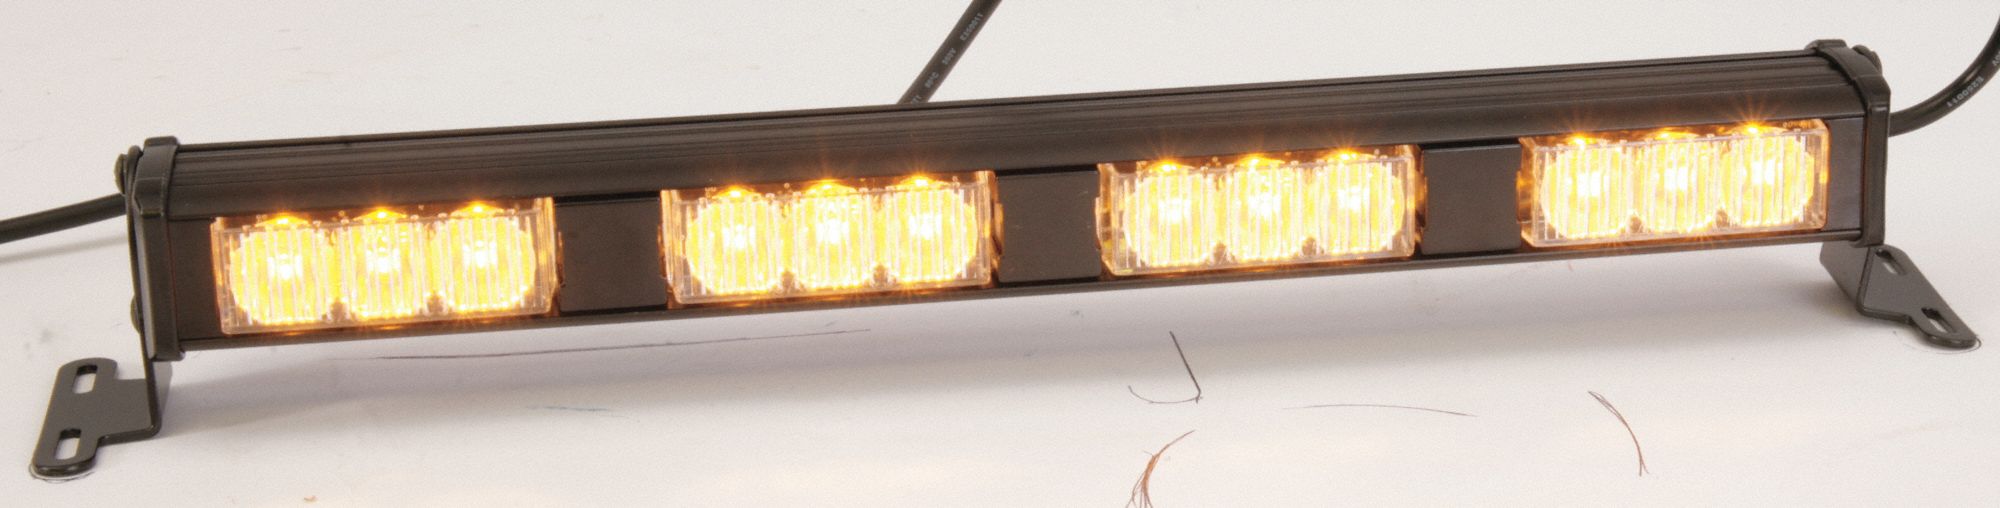 Quad Lighthead: 14 in Lg - Vehicle Lighting, 1 1/4 in Ht - Vehicle Lighting, Flashing